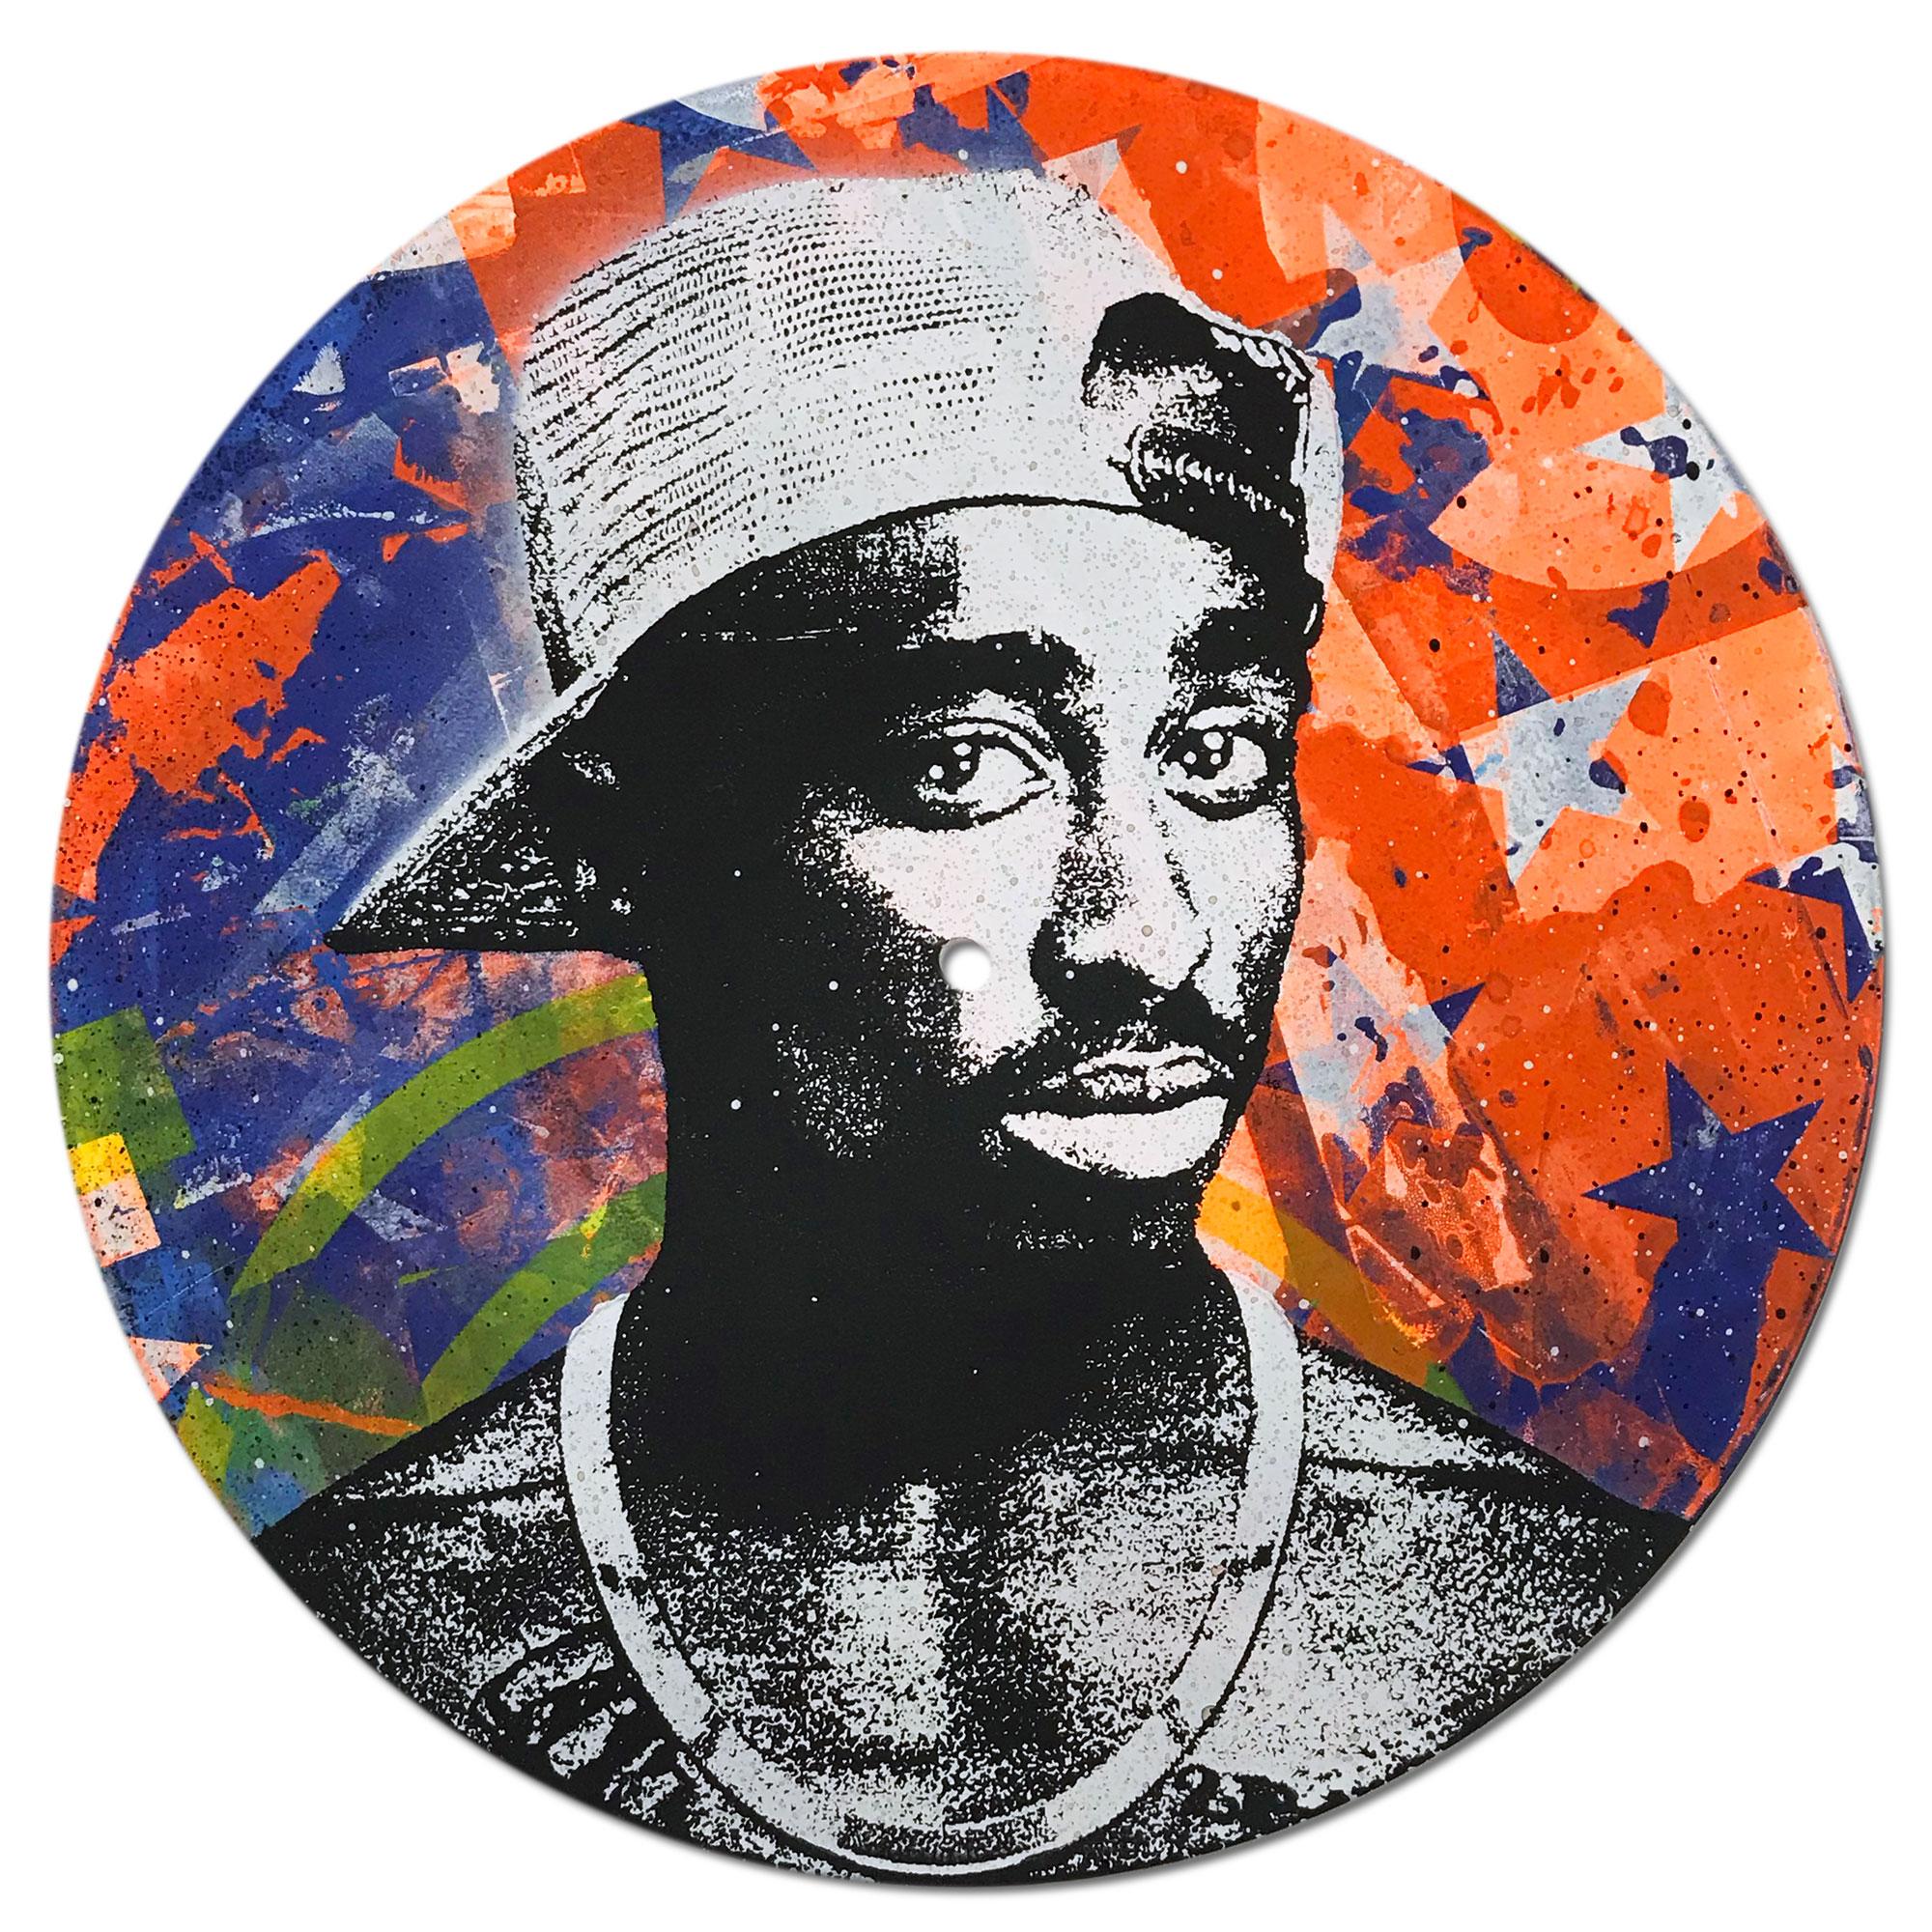 Tupac Shakur Vinyl Greg Gossel Pop Art LP Record (Singles & Sets Available) For Sale 2